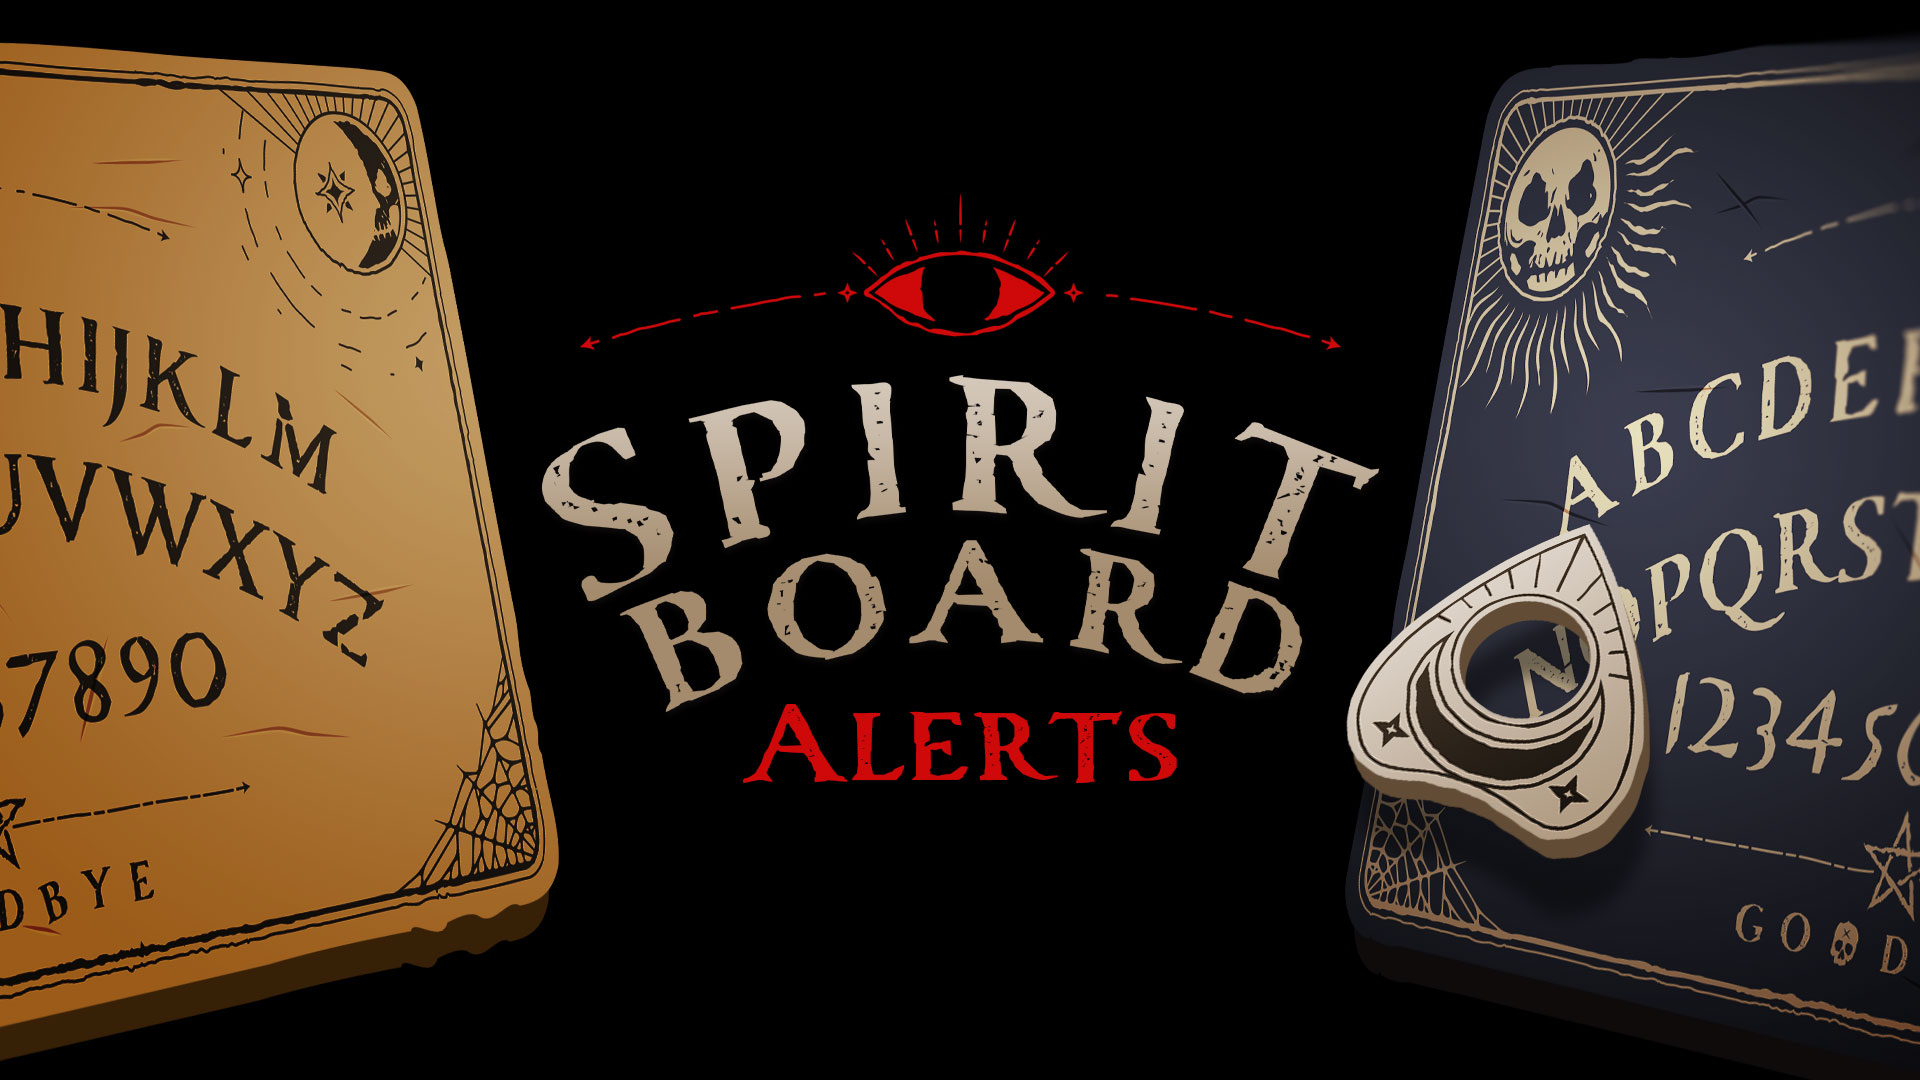 Spirit Board Thumbnail